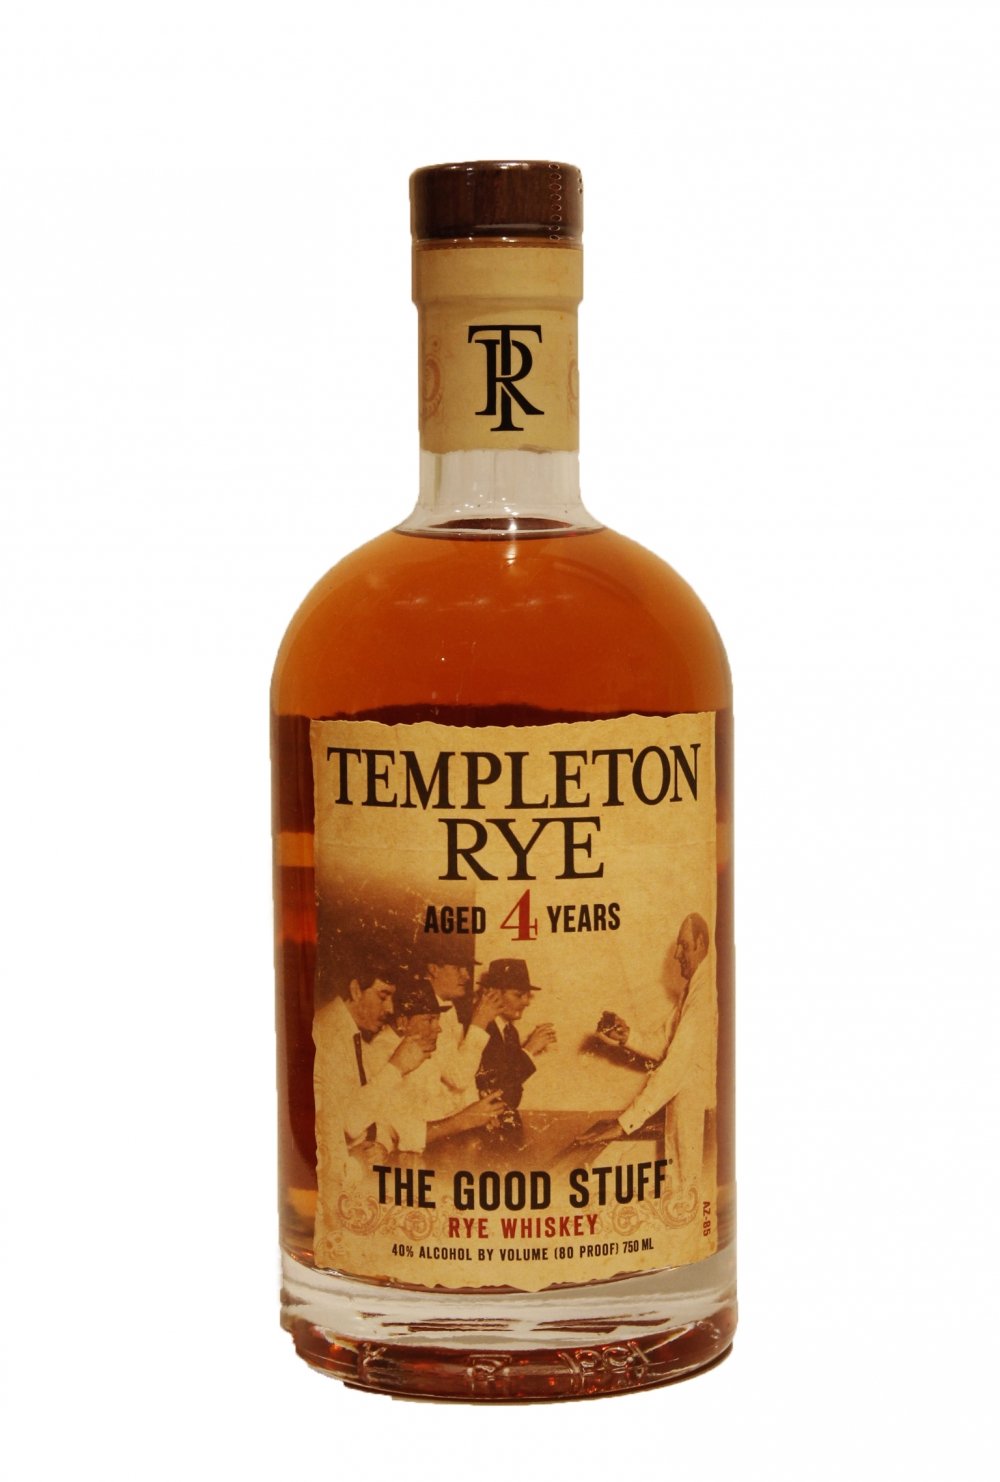 Templeton Rye 4 Years Old The Good Stuff